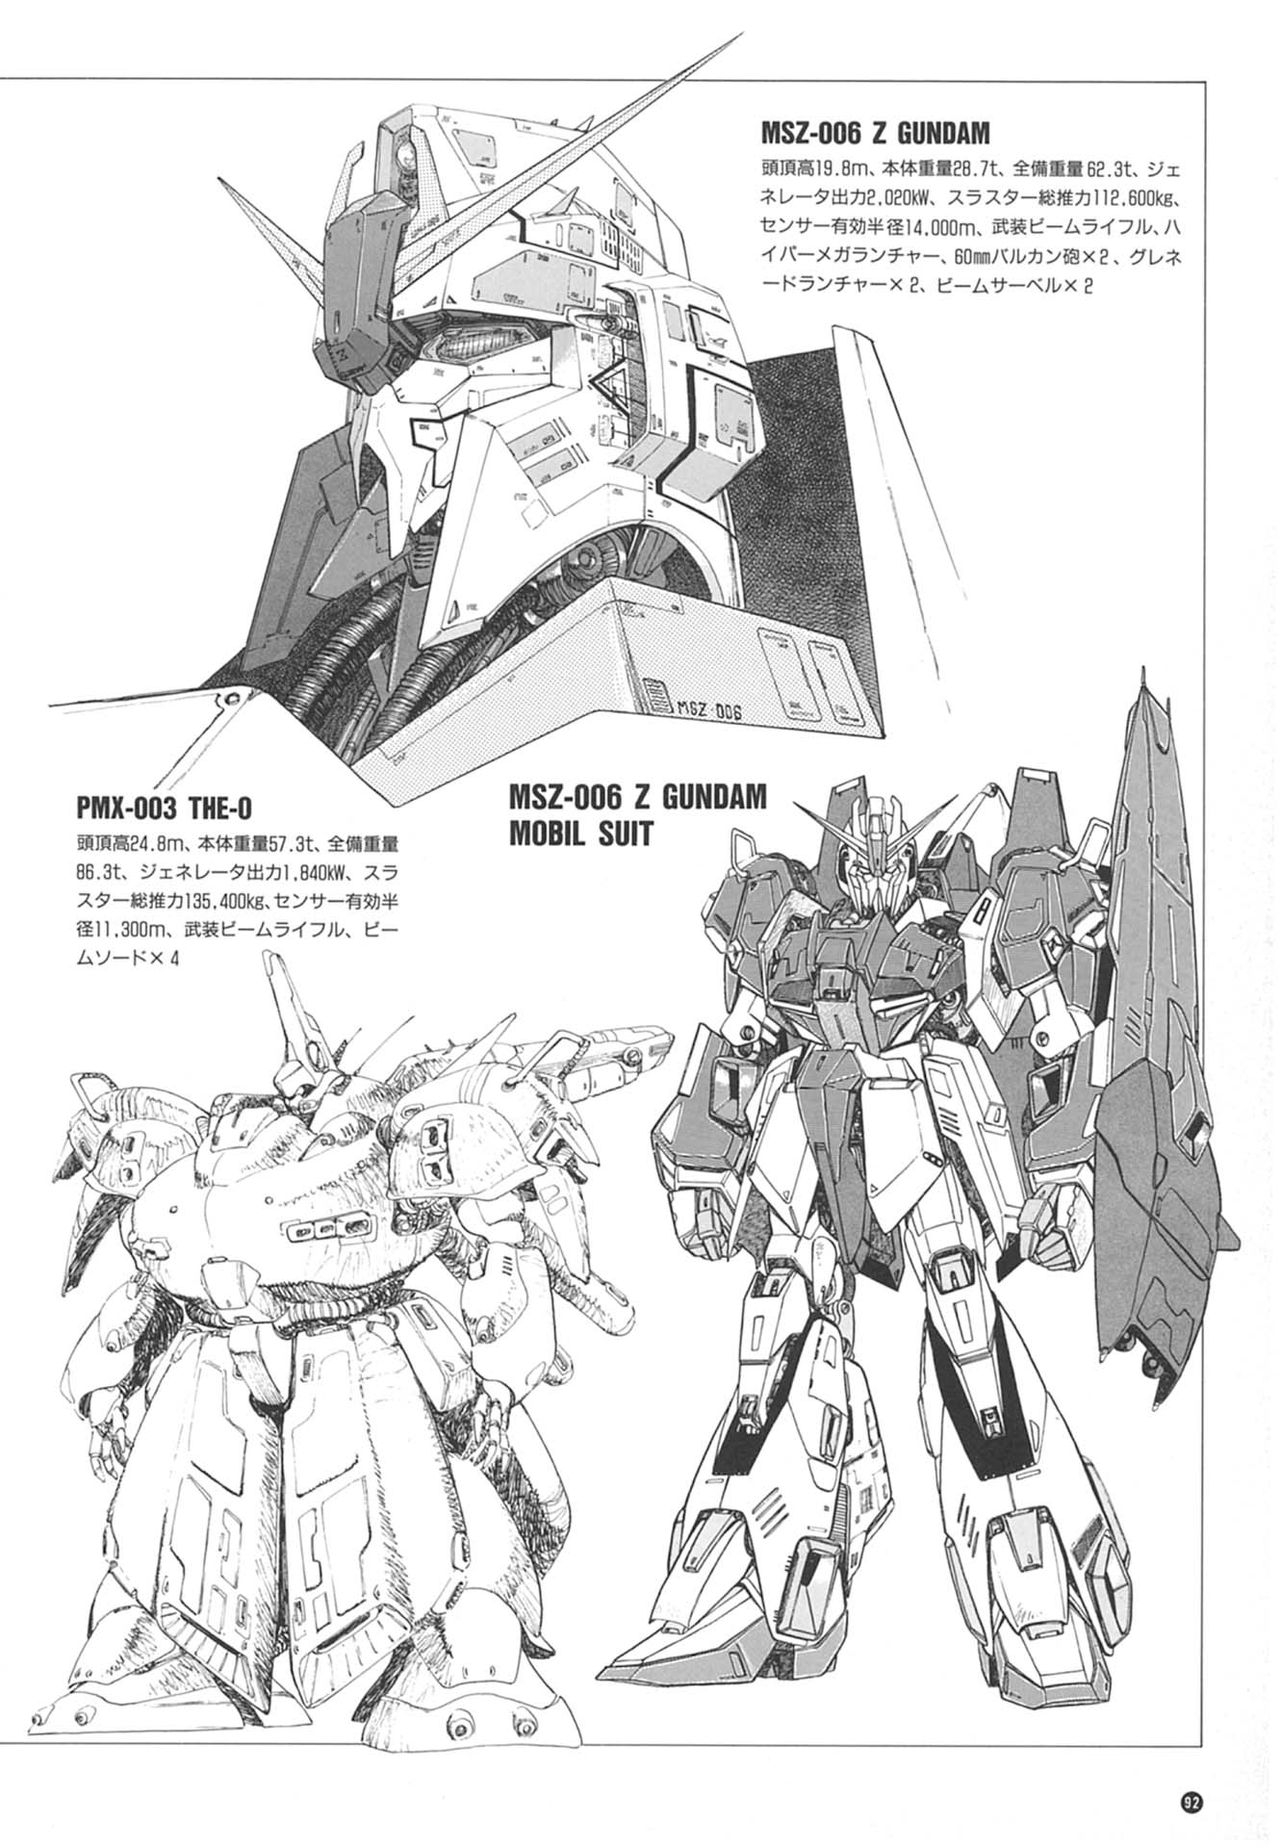 [Kazuhisa Kondo] Kazuhisa Kondo 2D & 3D Works - Go Ahead - From Mobile Suit Gundam to Original Mechanism 91